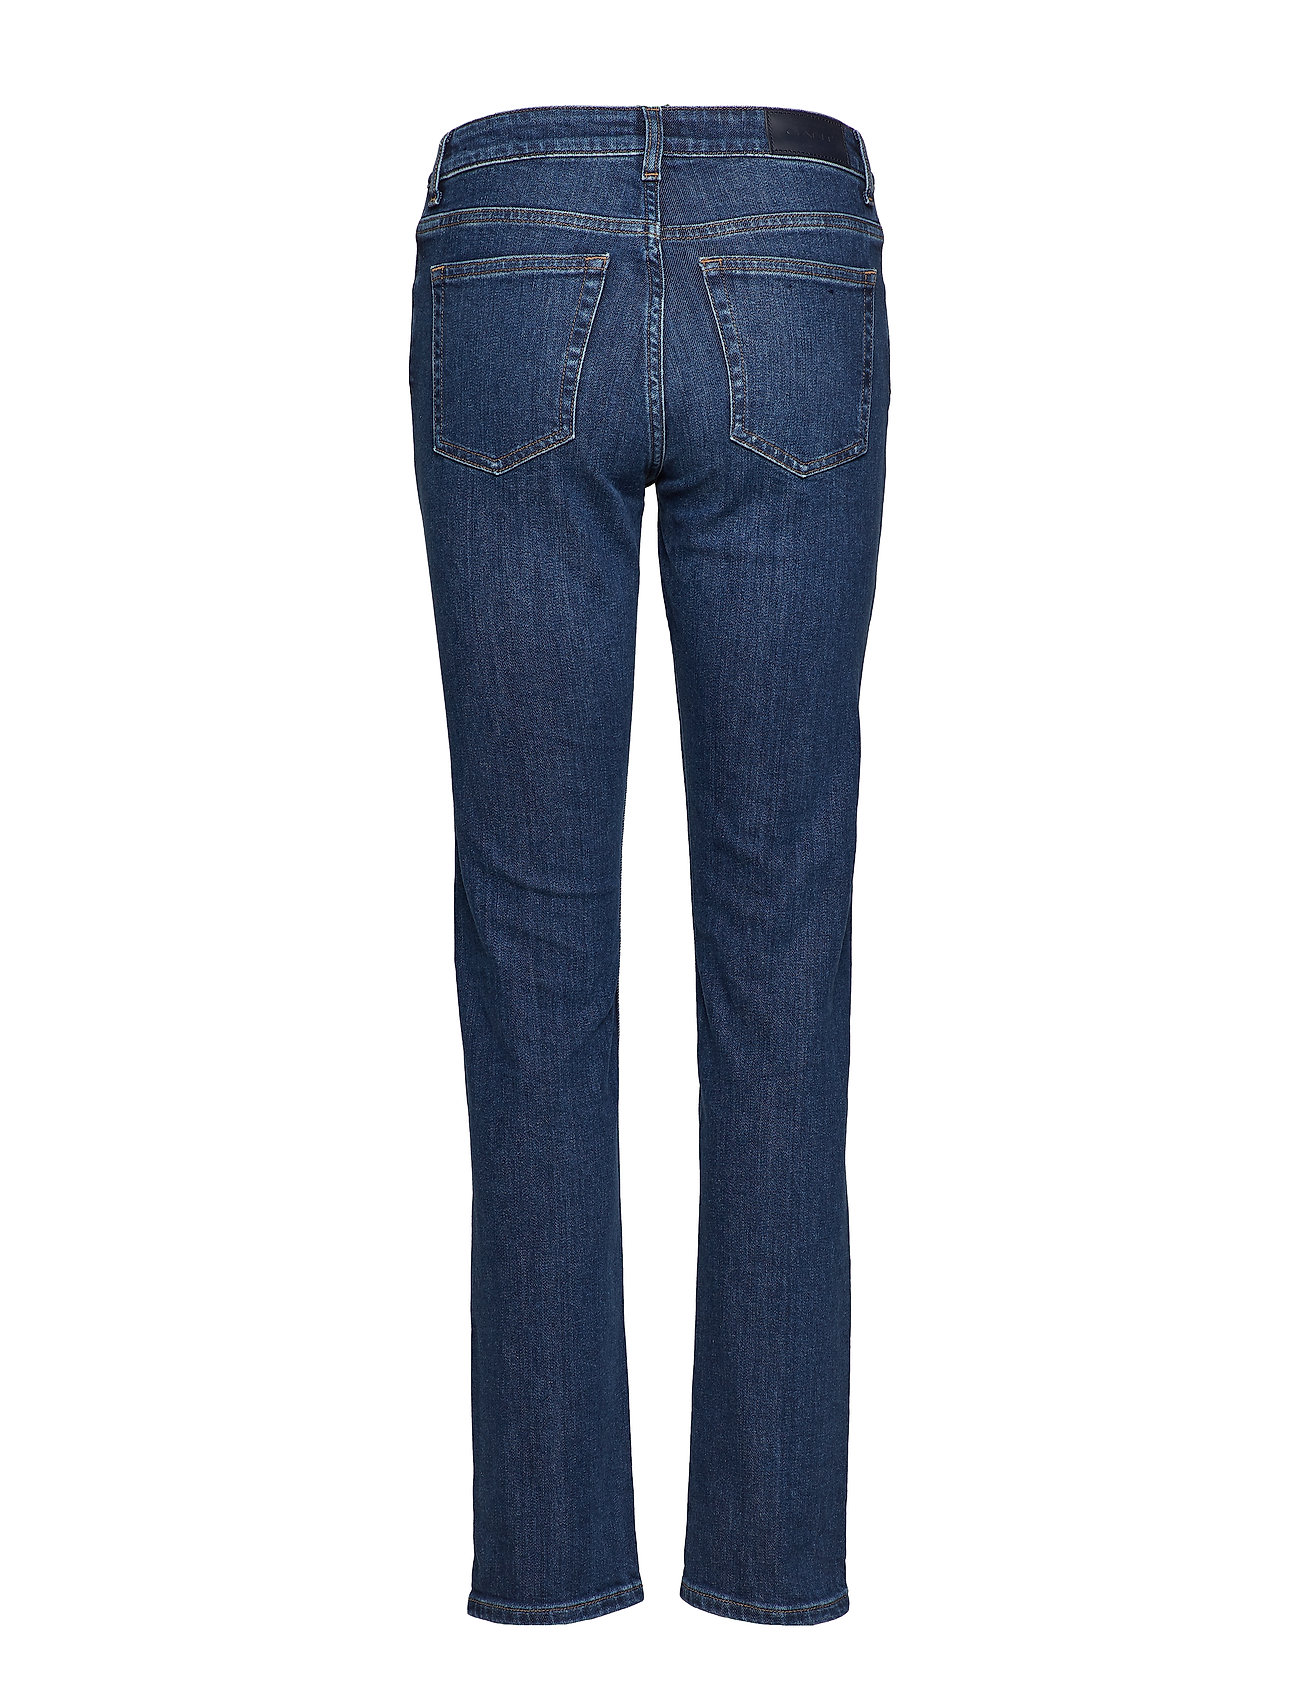 GANT - SLIM CLASSIC JEANS - slim jeans - mid blue worn in - 1